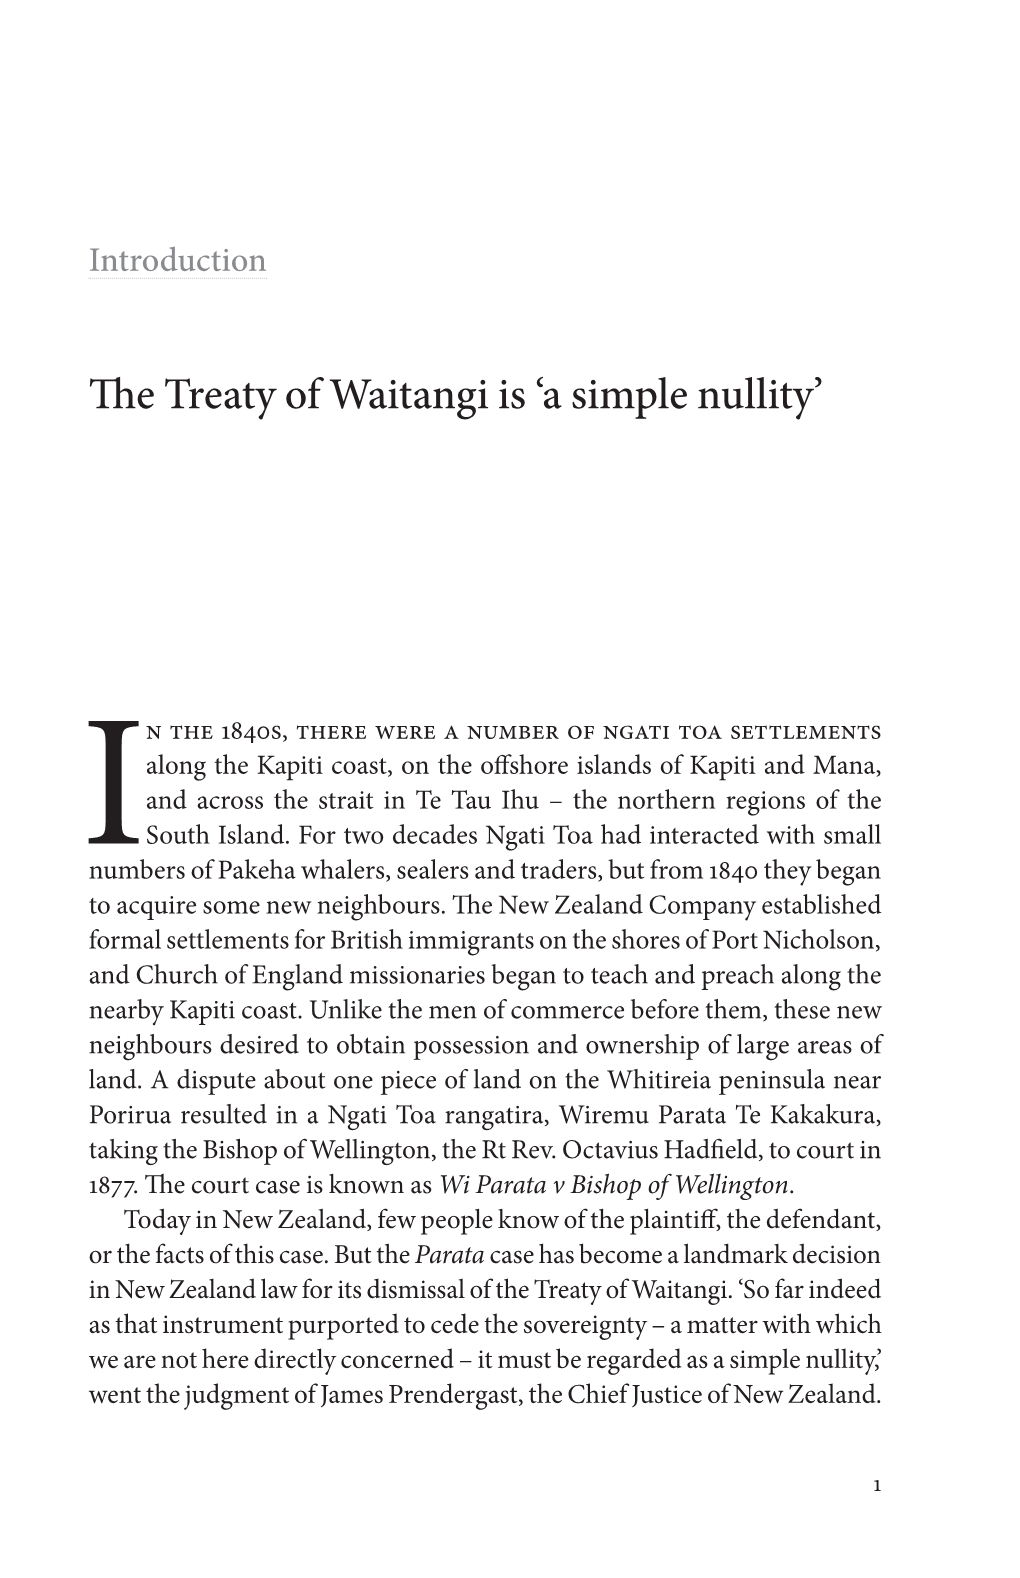 The Treaty of Waitangi Is 'A Simple Nullity'